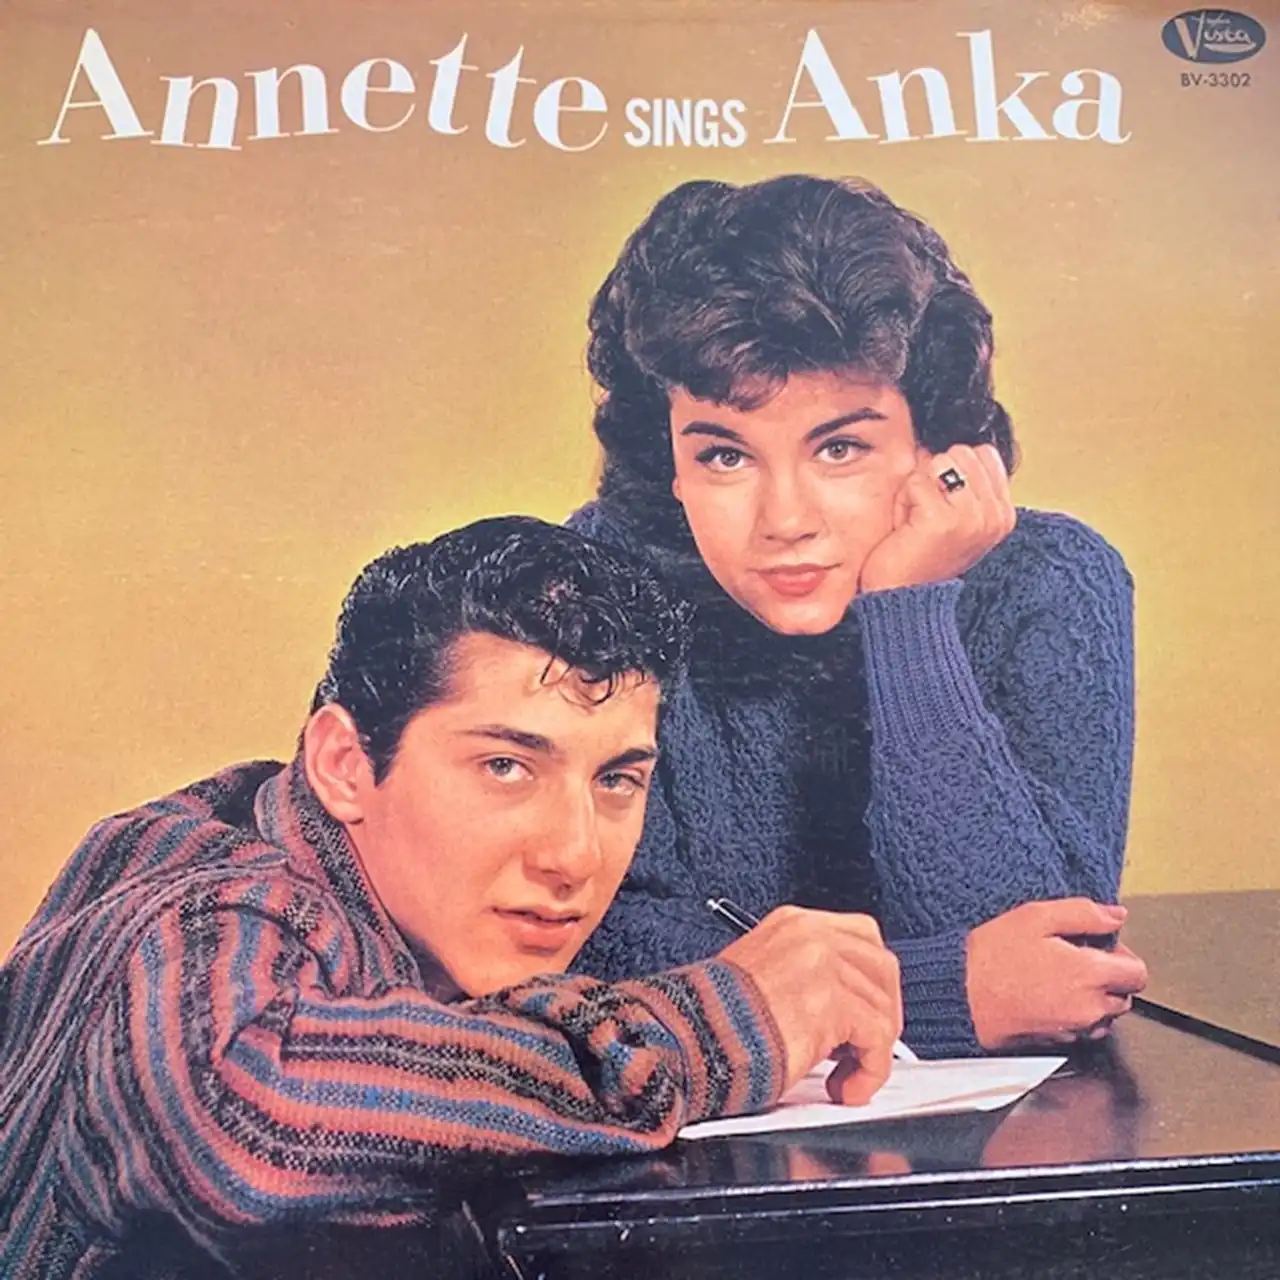 ANNETTE / ANNETTE SINGS ANKA